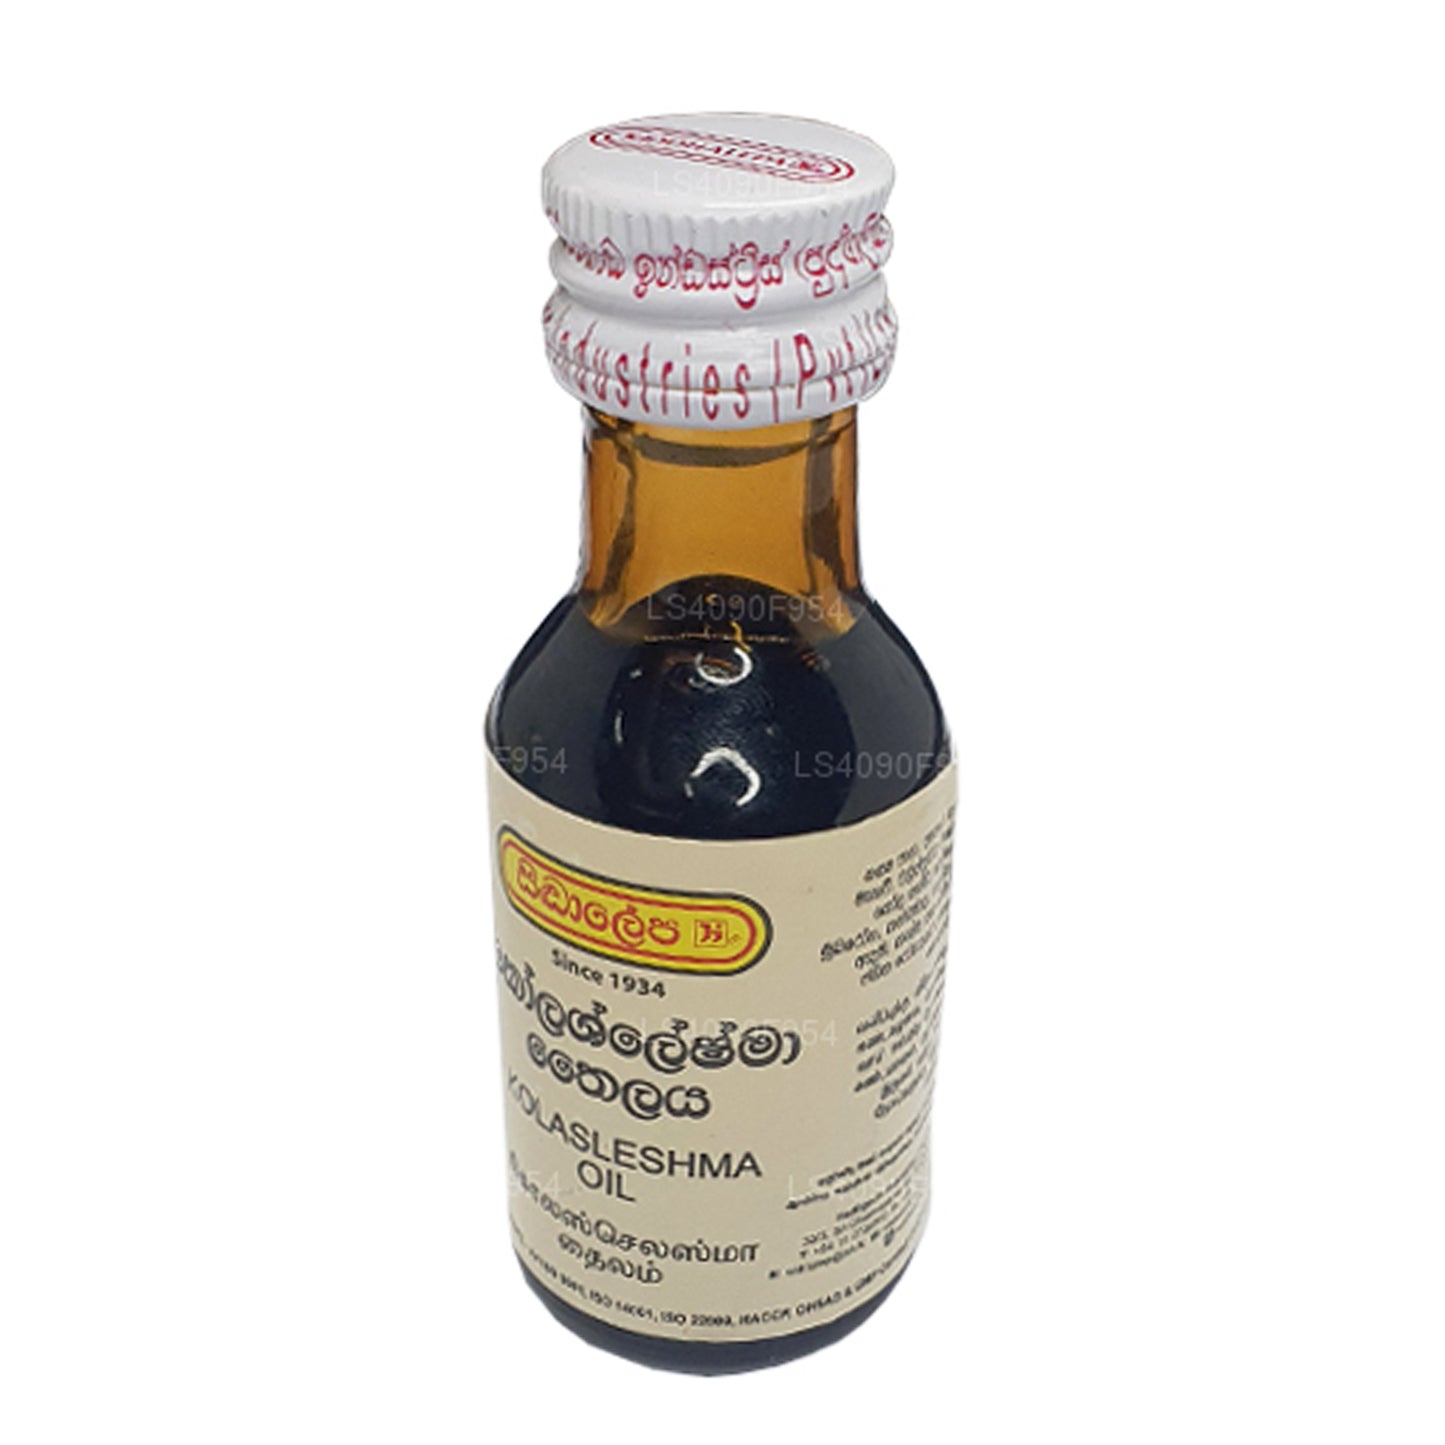 Siddhalepa Kolasleshma Oil (30ml)